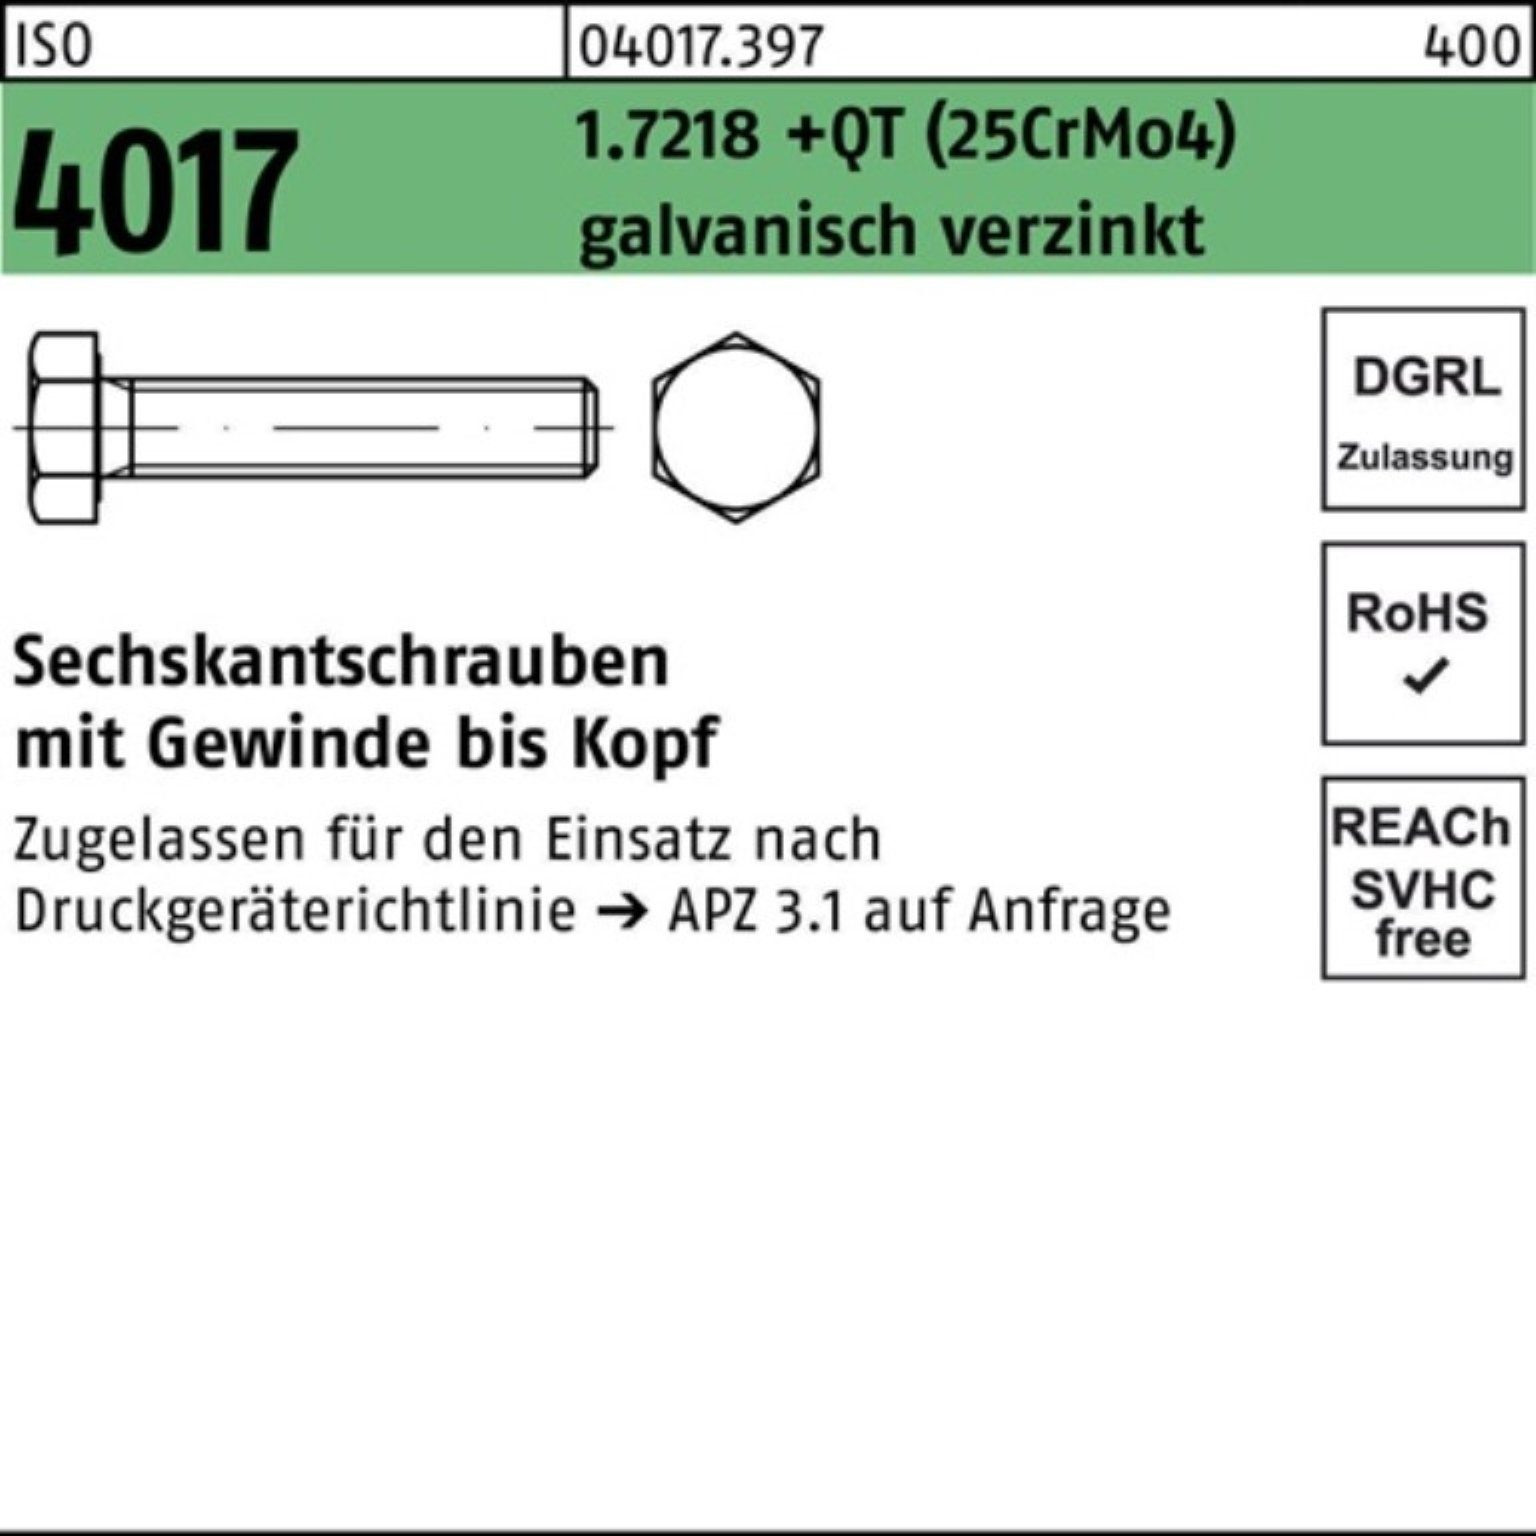 Bufab Sechskantschraube 100er 1.7218 ISO M20x30 +QT Sechskantschraube (25CrMo4) Pack VG 4017 g